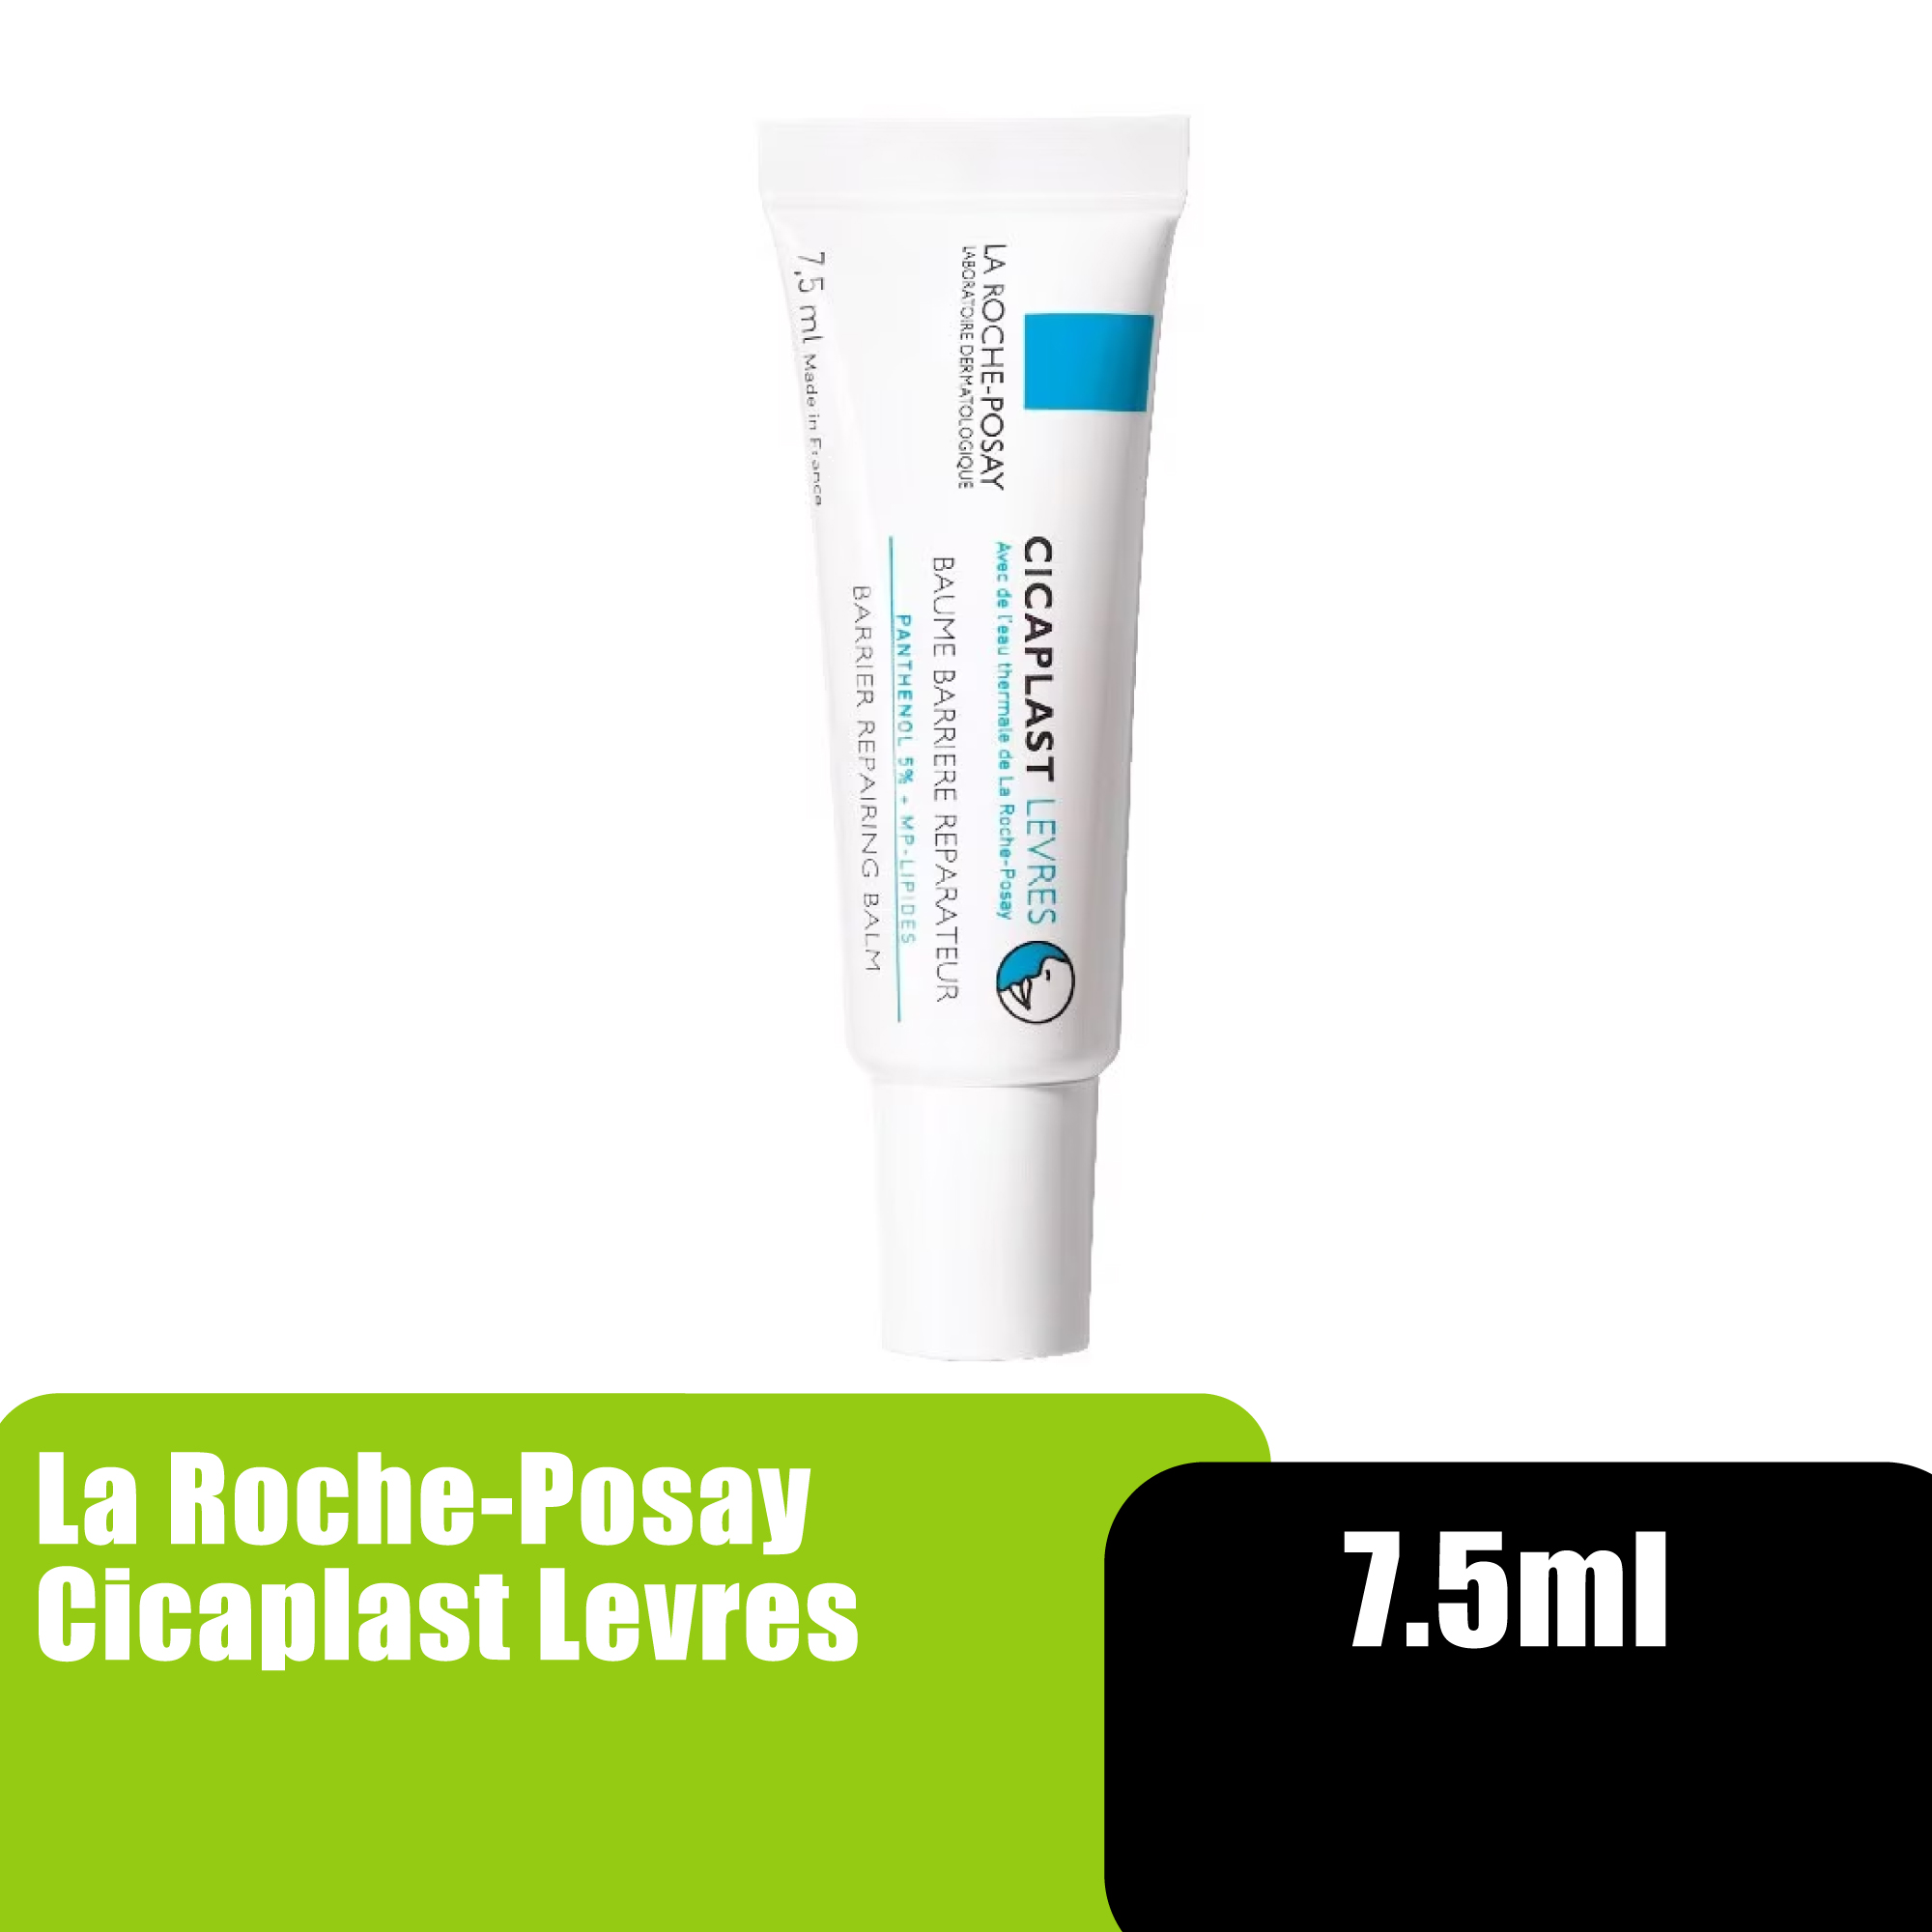 LA ROCHE POSAY Cicaplast Levres (7.5ml) Hydrating Soothing Balm, Lip Balm SPF, Lib Bal, Lipbalm SPF, Lip Sunscreen